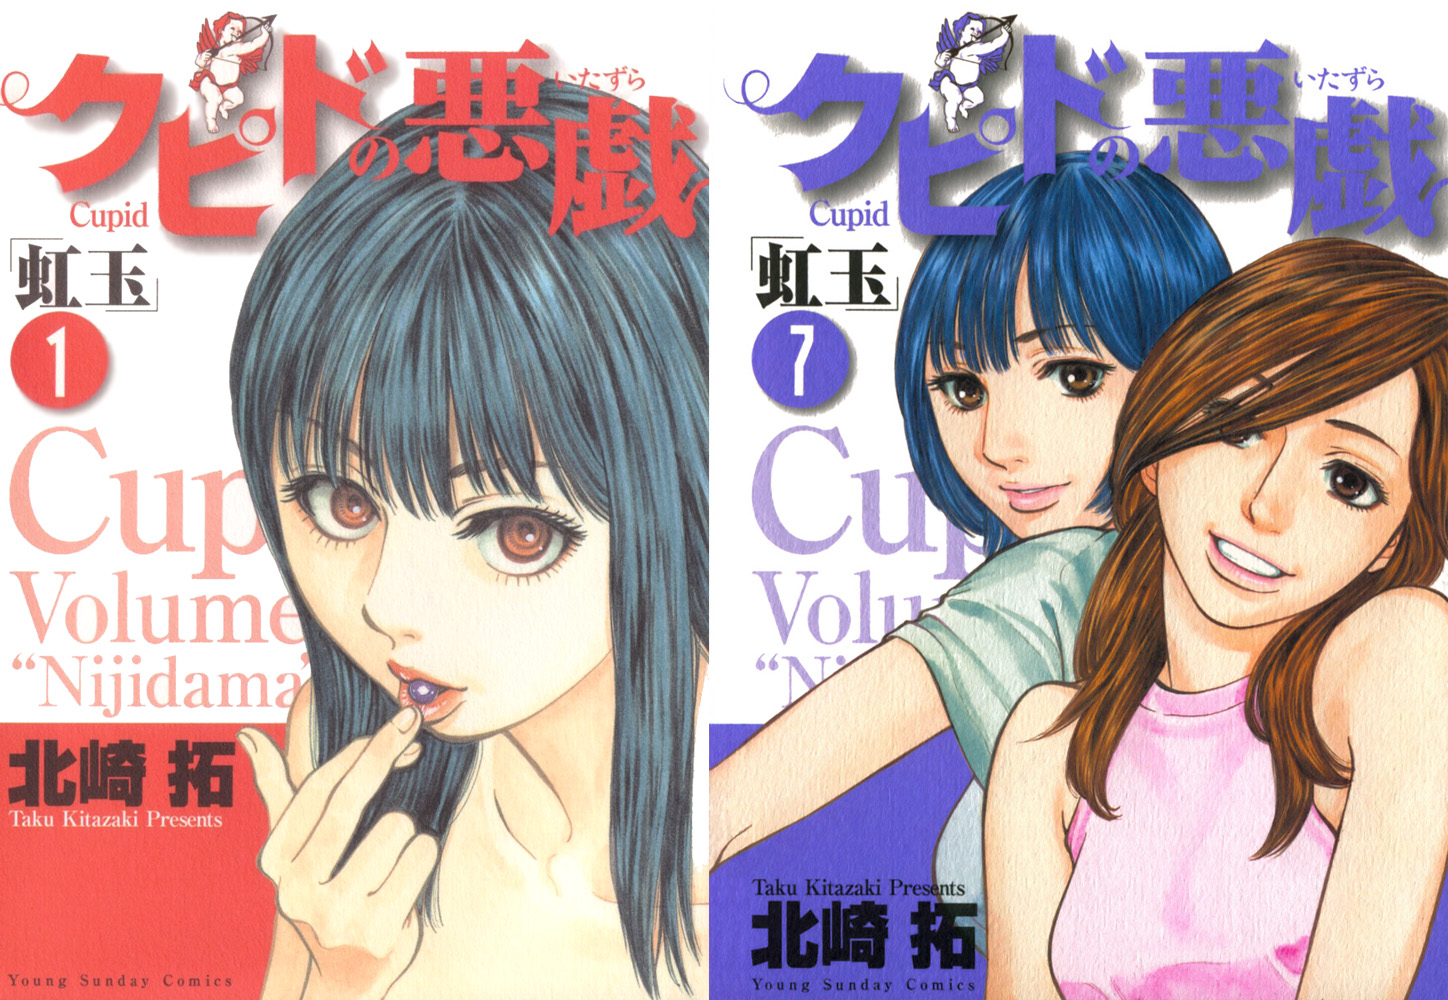 Download Free Raw Manga Cupid No Itazura Nijidama クピドの悪戯 虹玉 7 Volume Complete At Rawcl